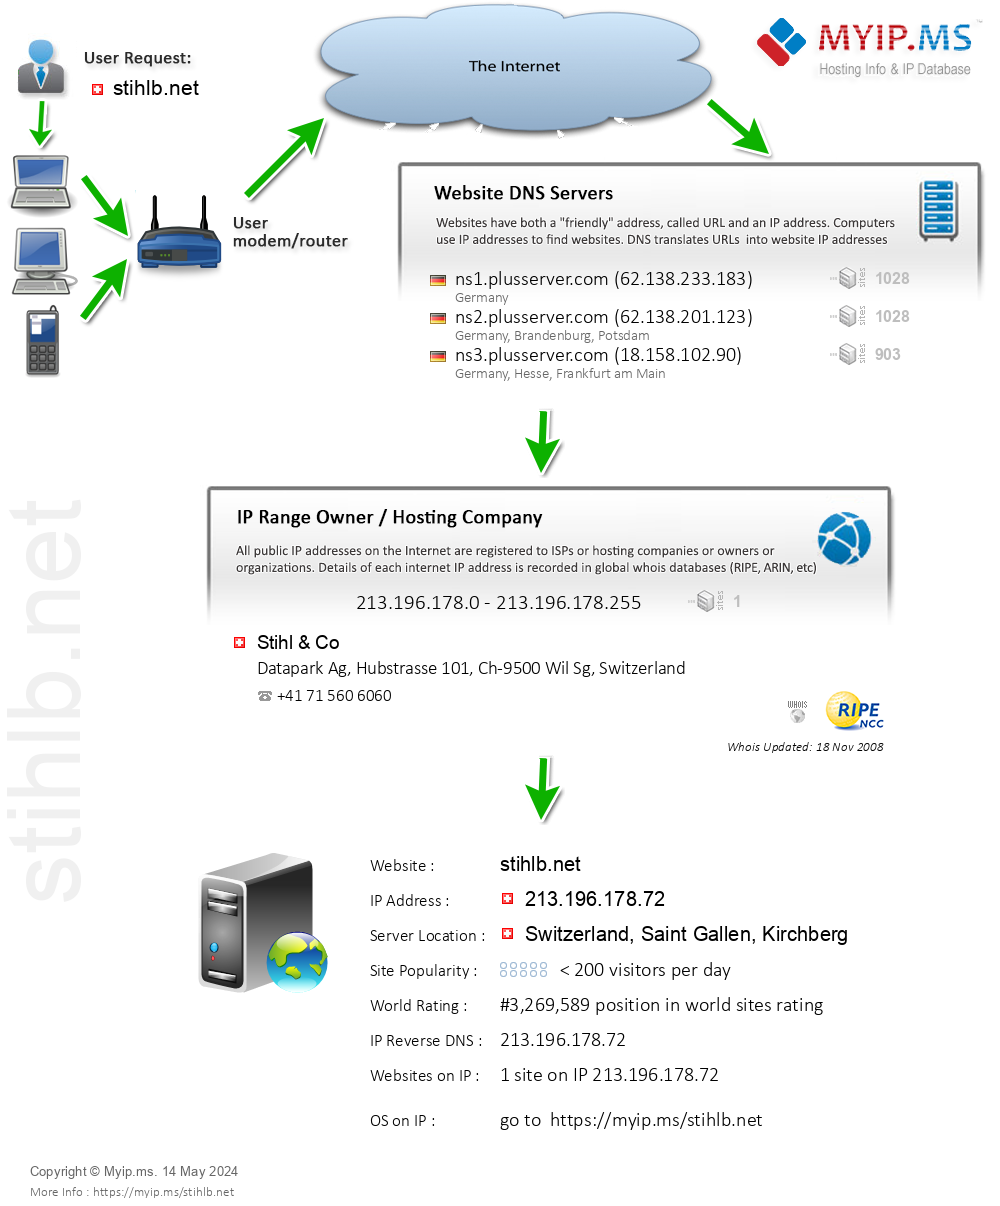 Stihlb.net - Website Hosting Visual IP Diagram